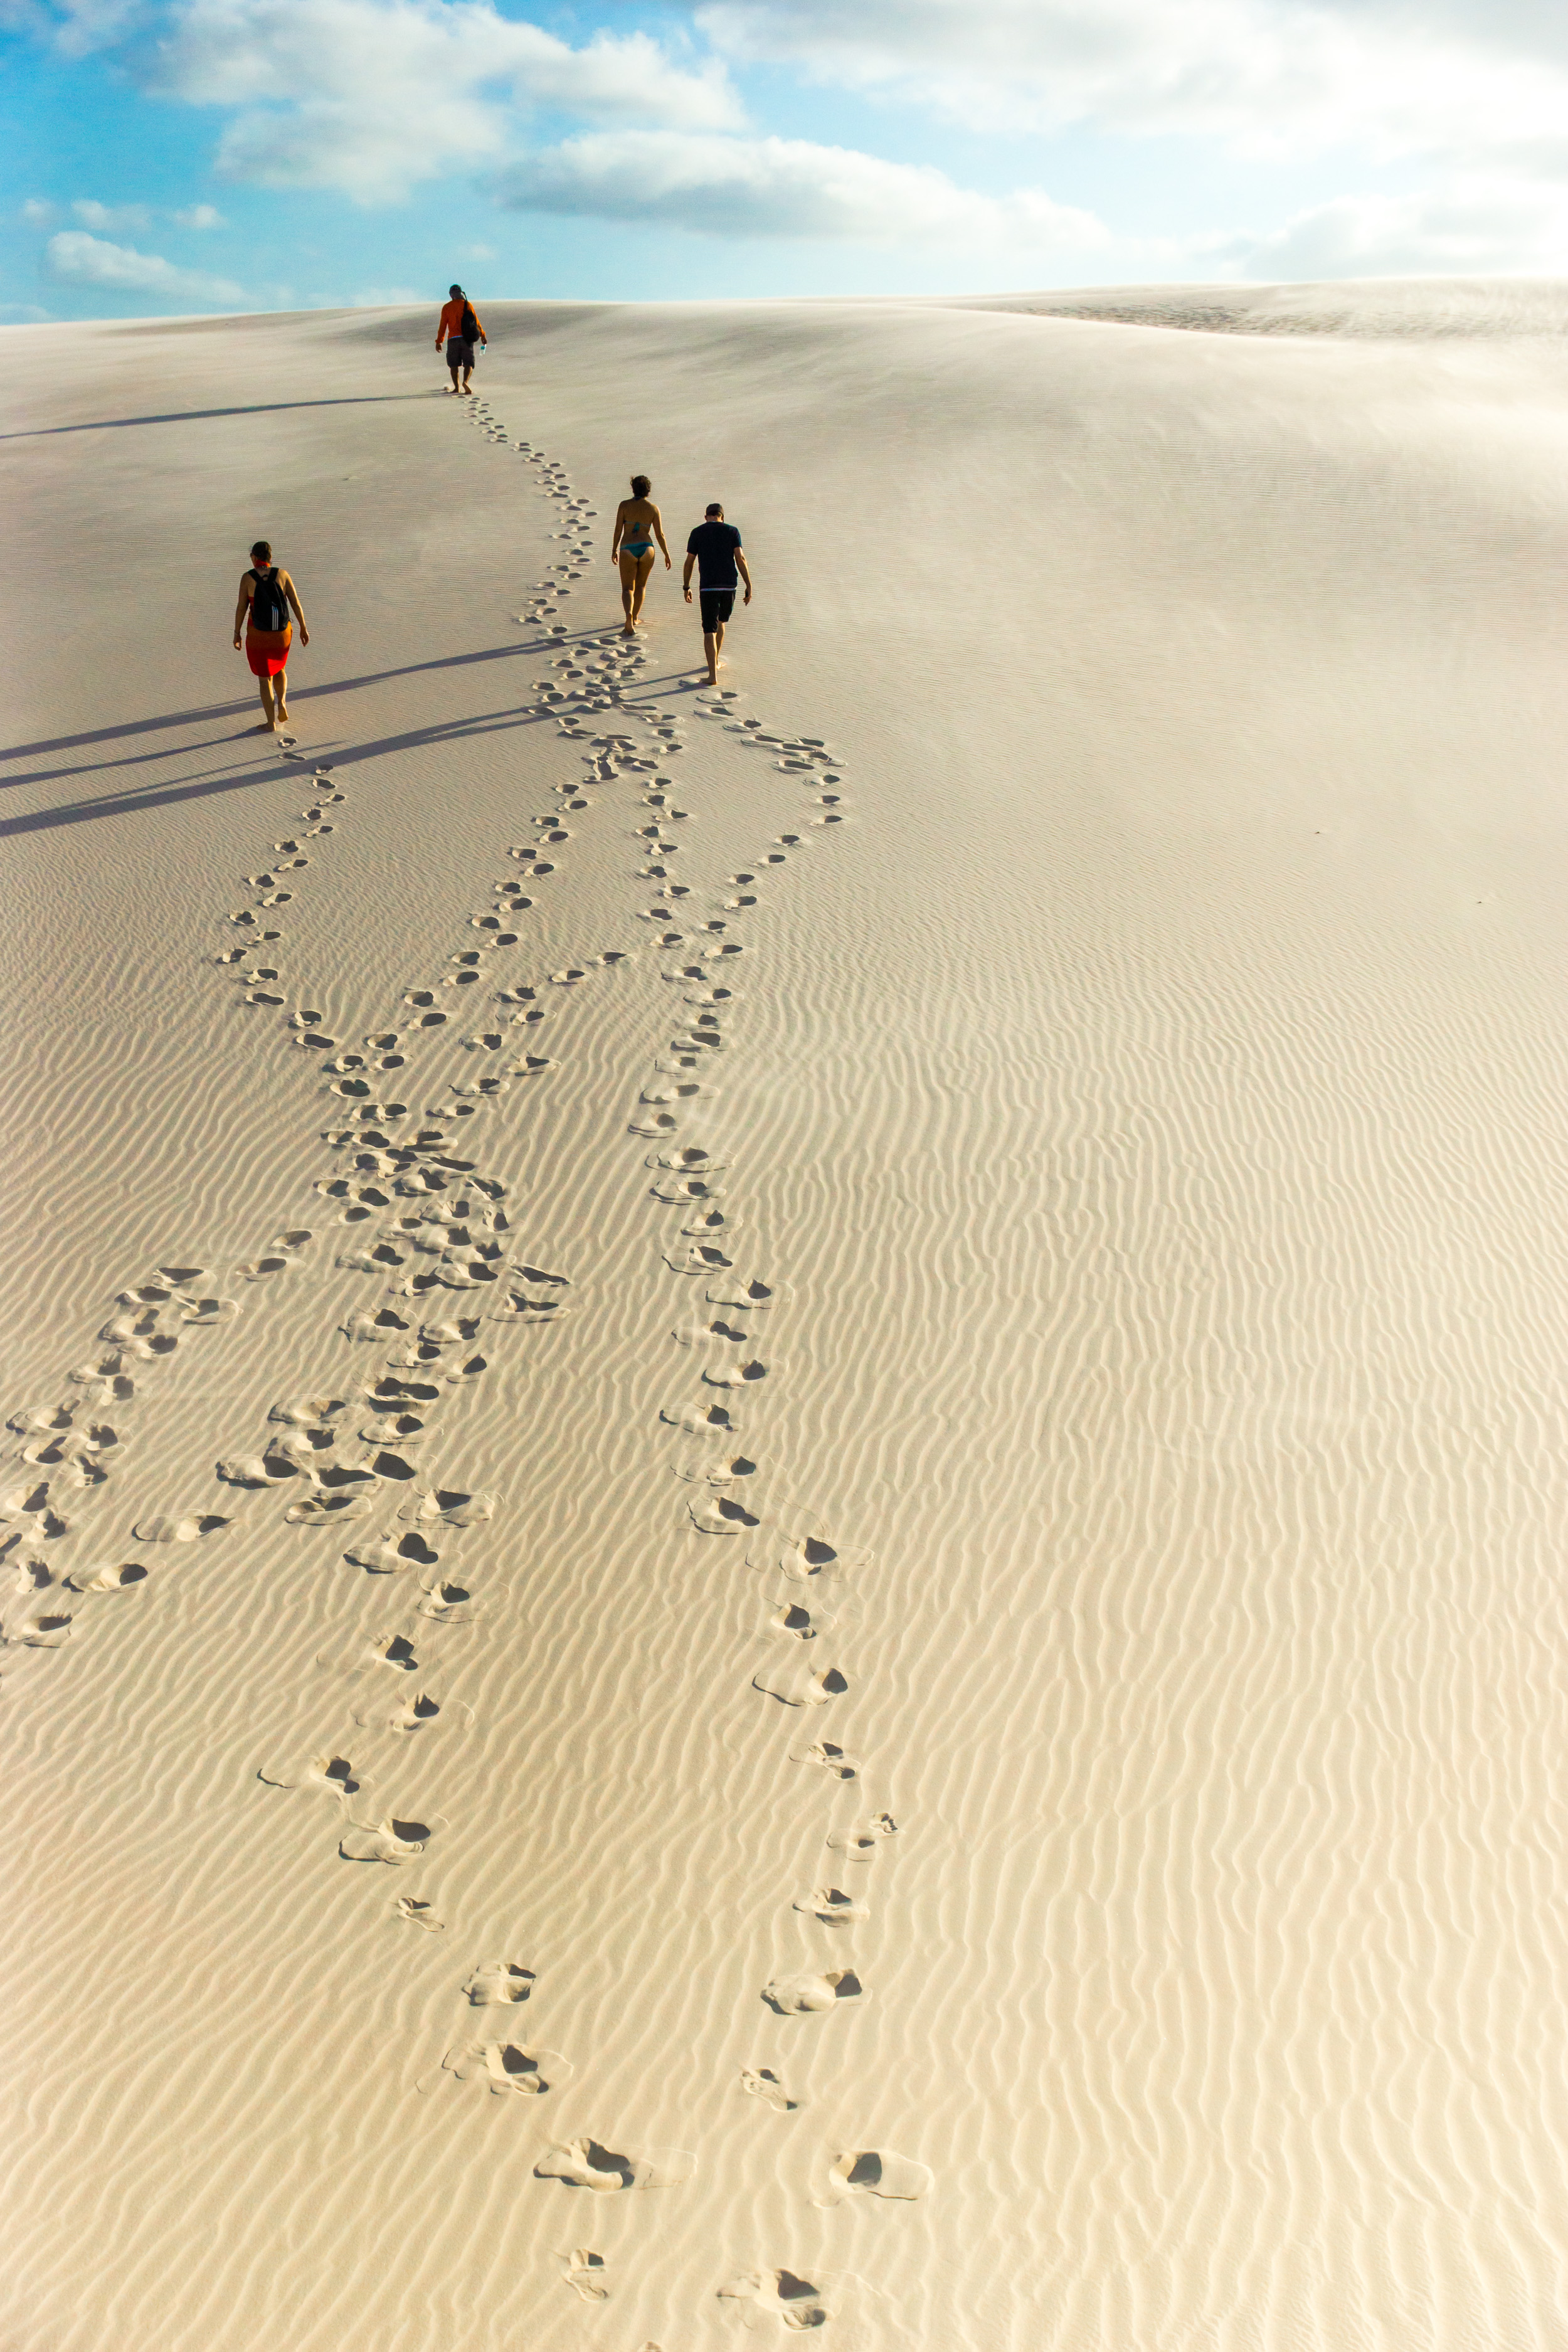 Nikki Pepper. Leaving footprints in the sand.